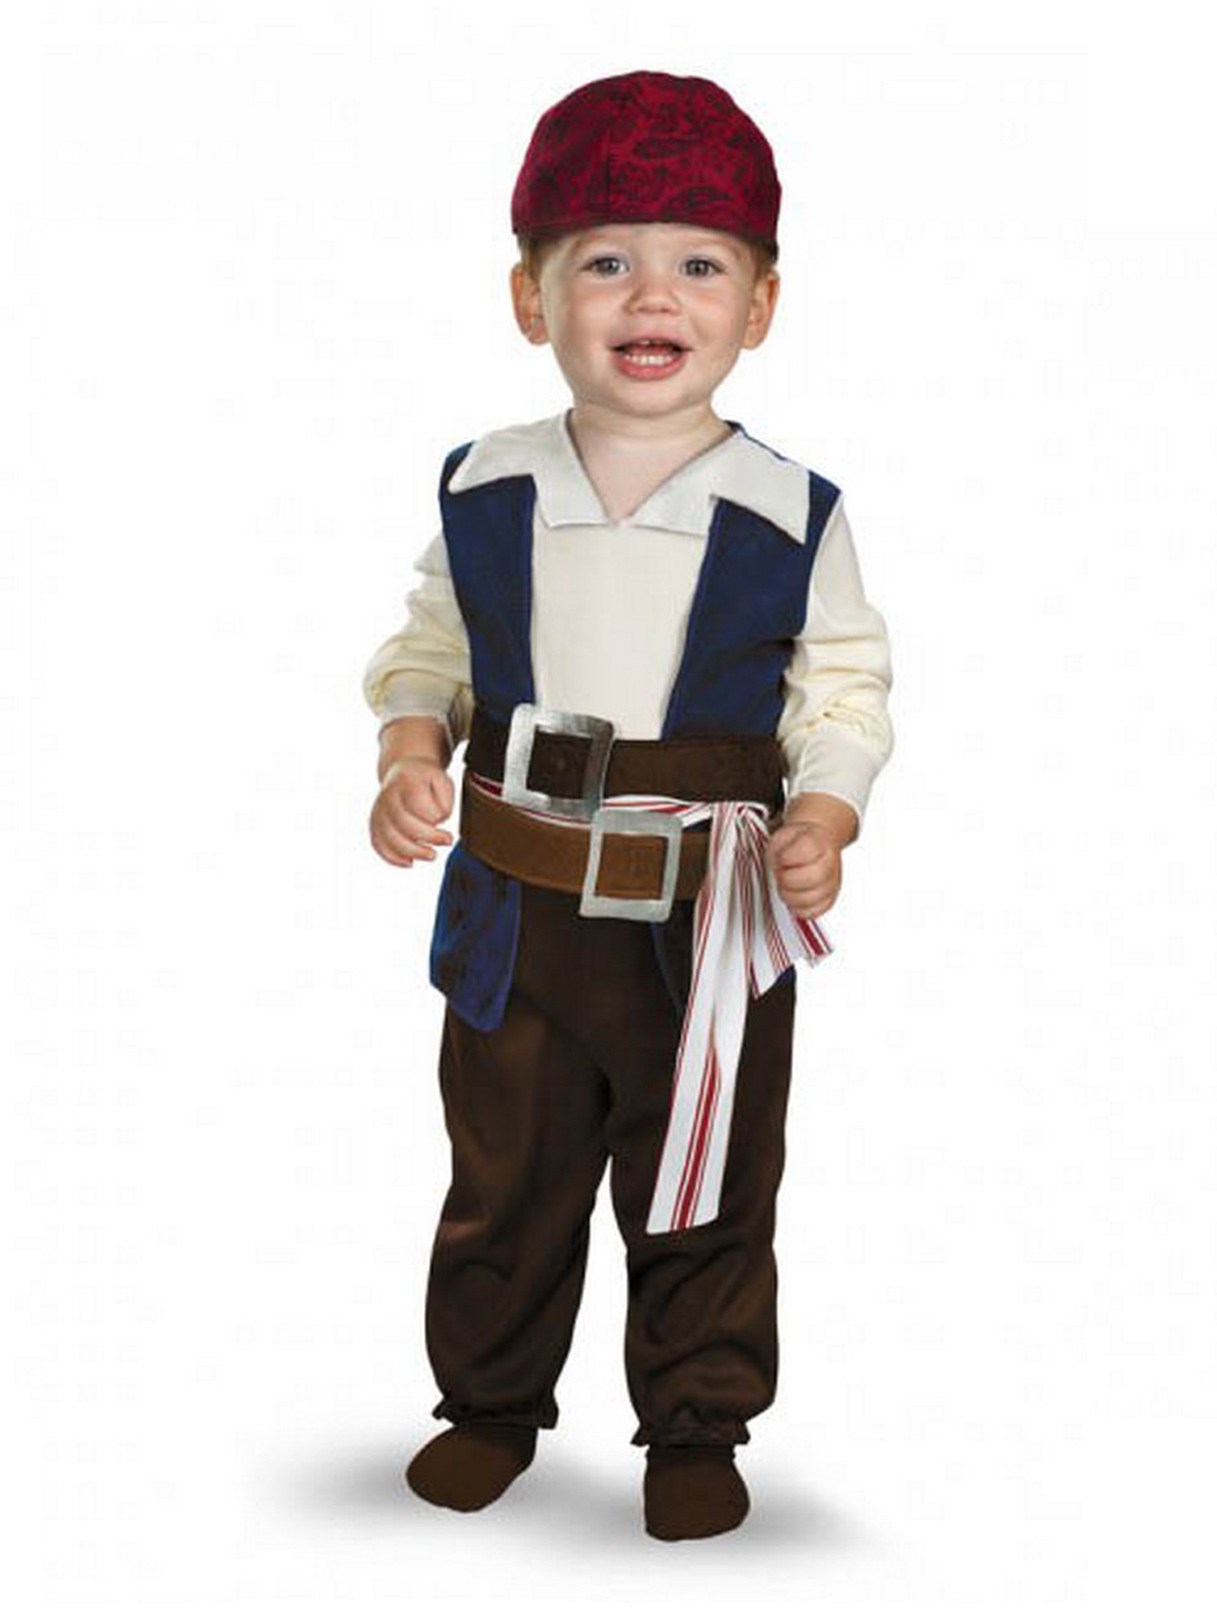 Pirates of the Caribbean 4 On Stranger Tides - Jack Sparrow Infant / Toddler Costume